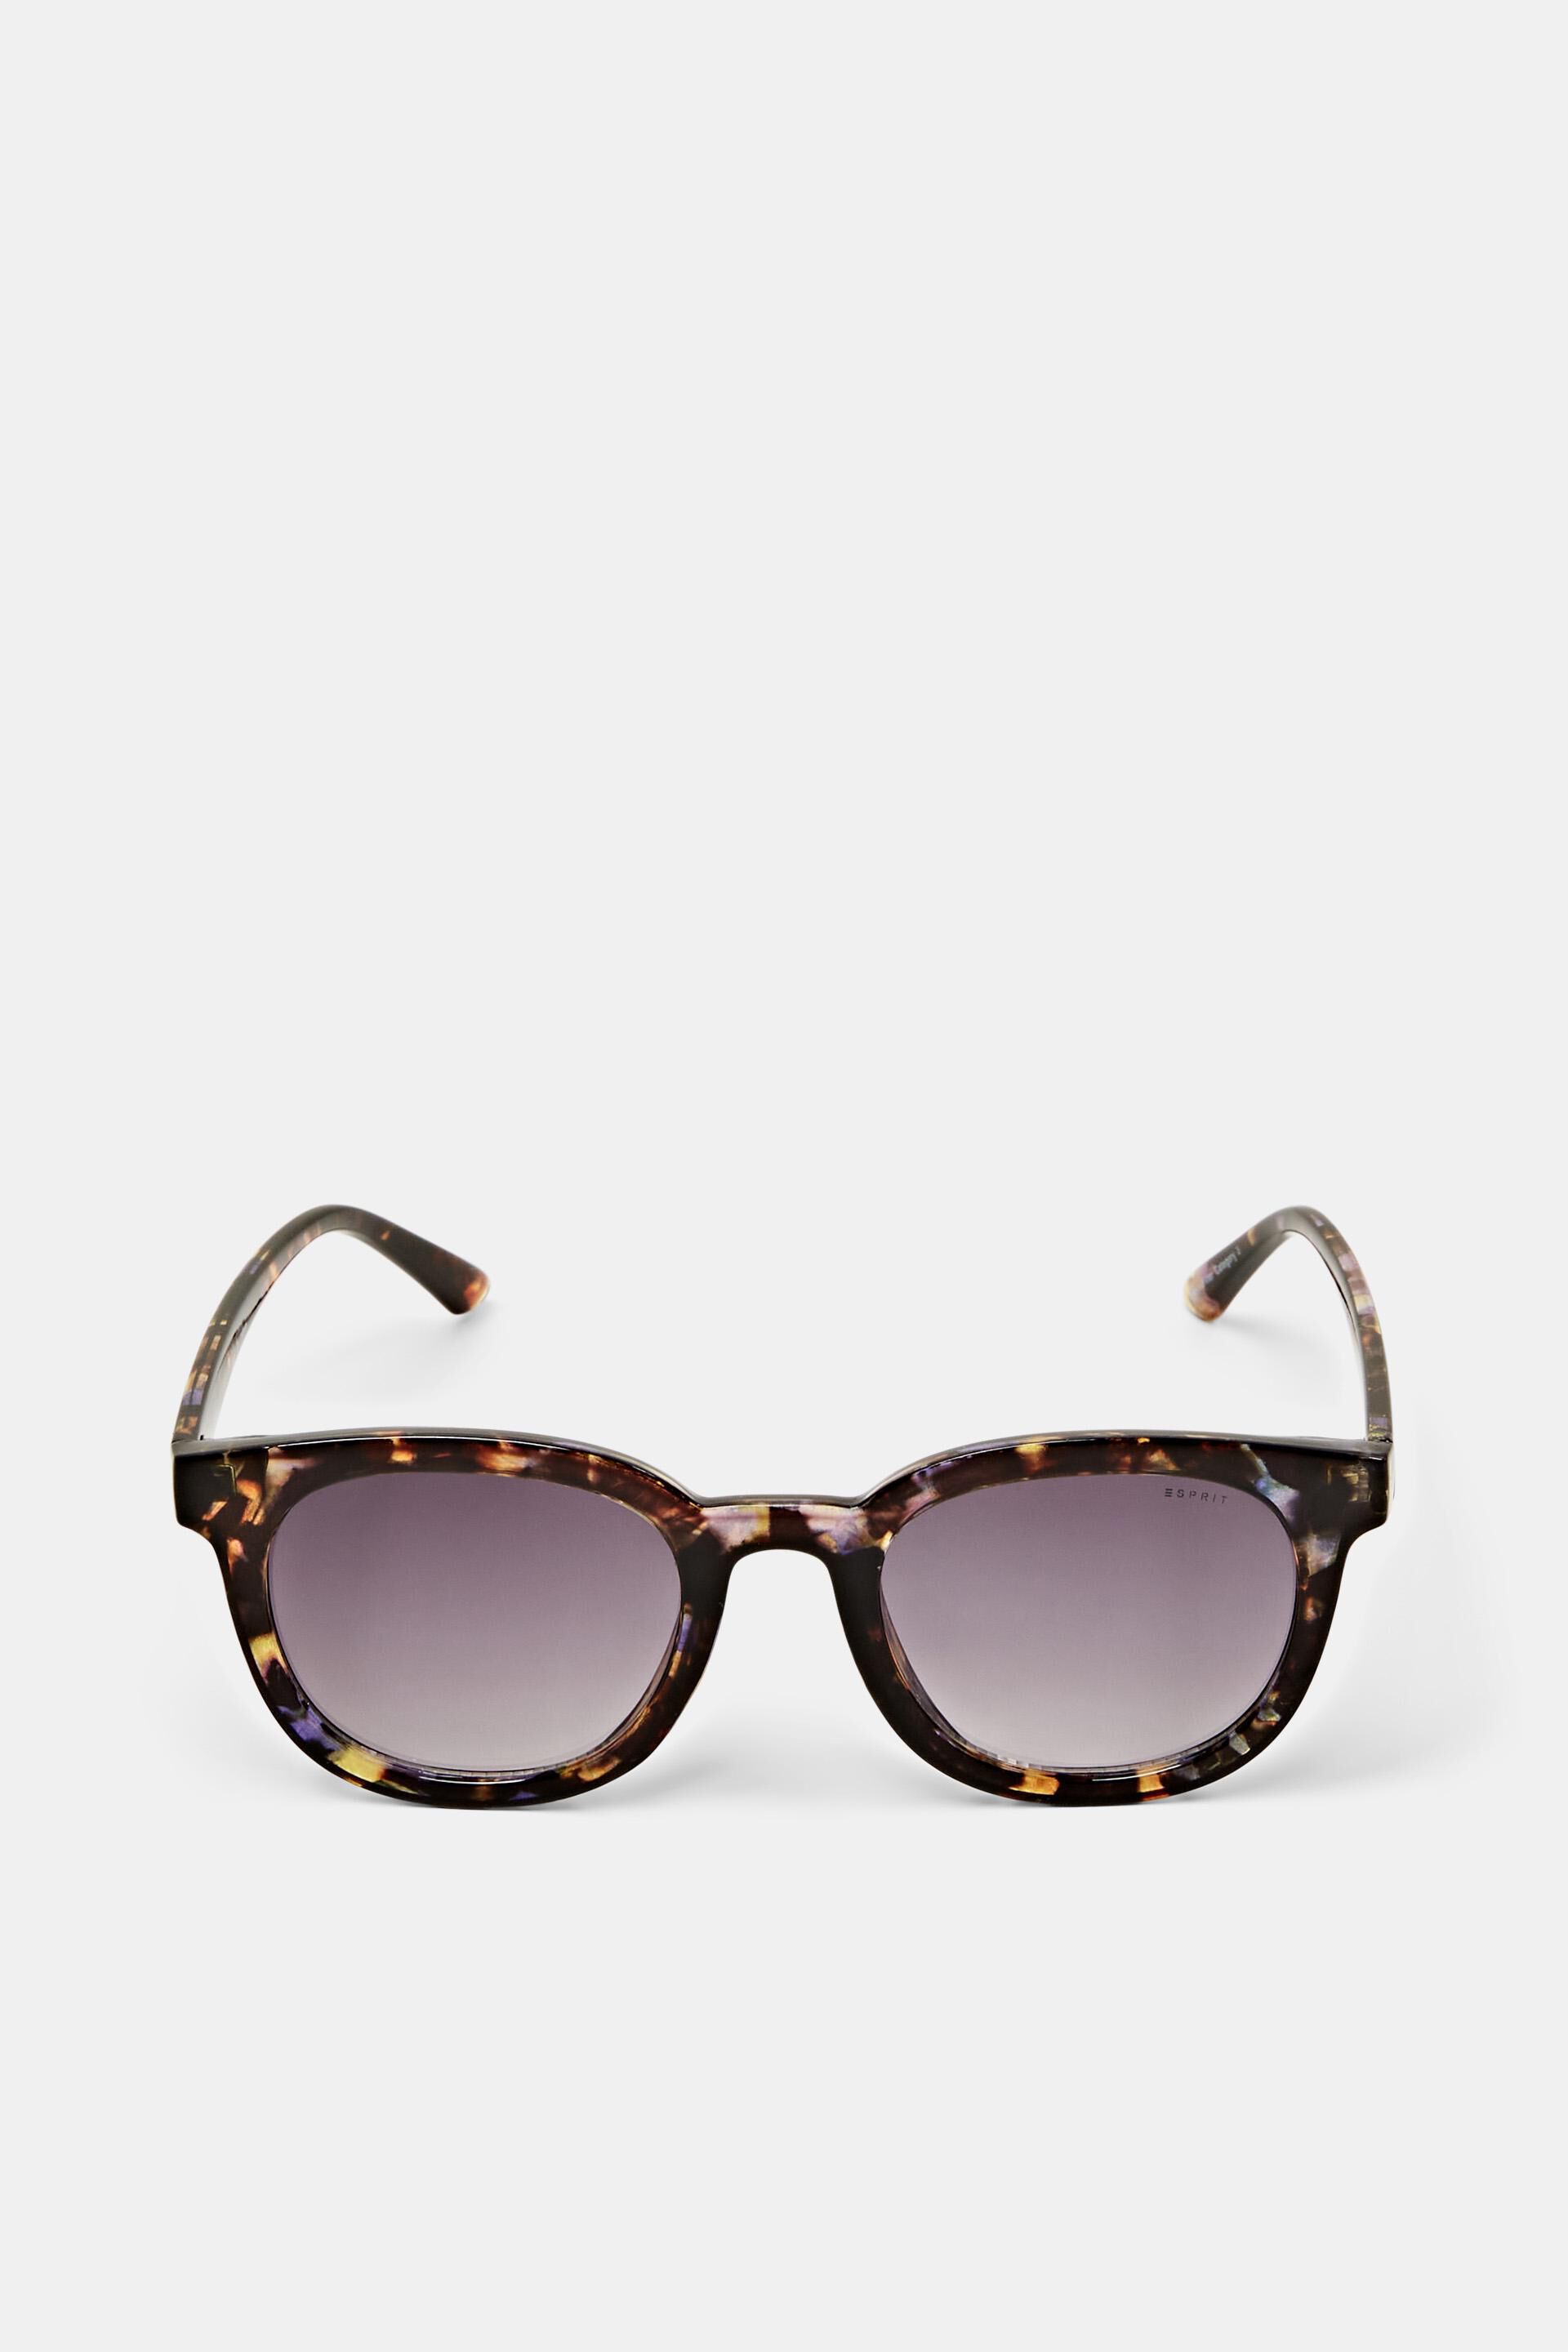 Esprit Round sunglasses framed